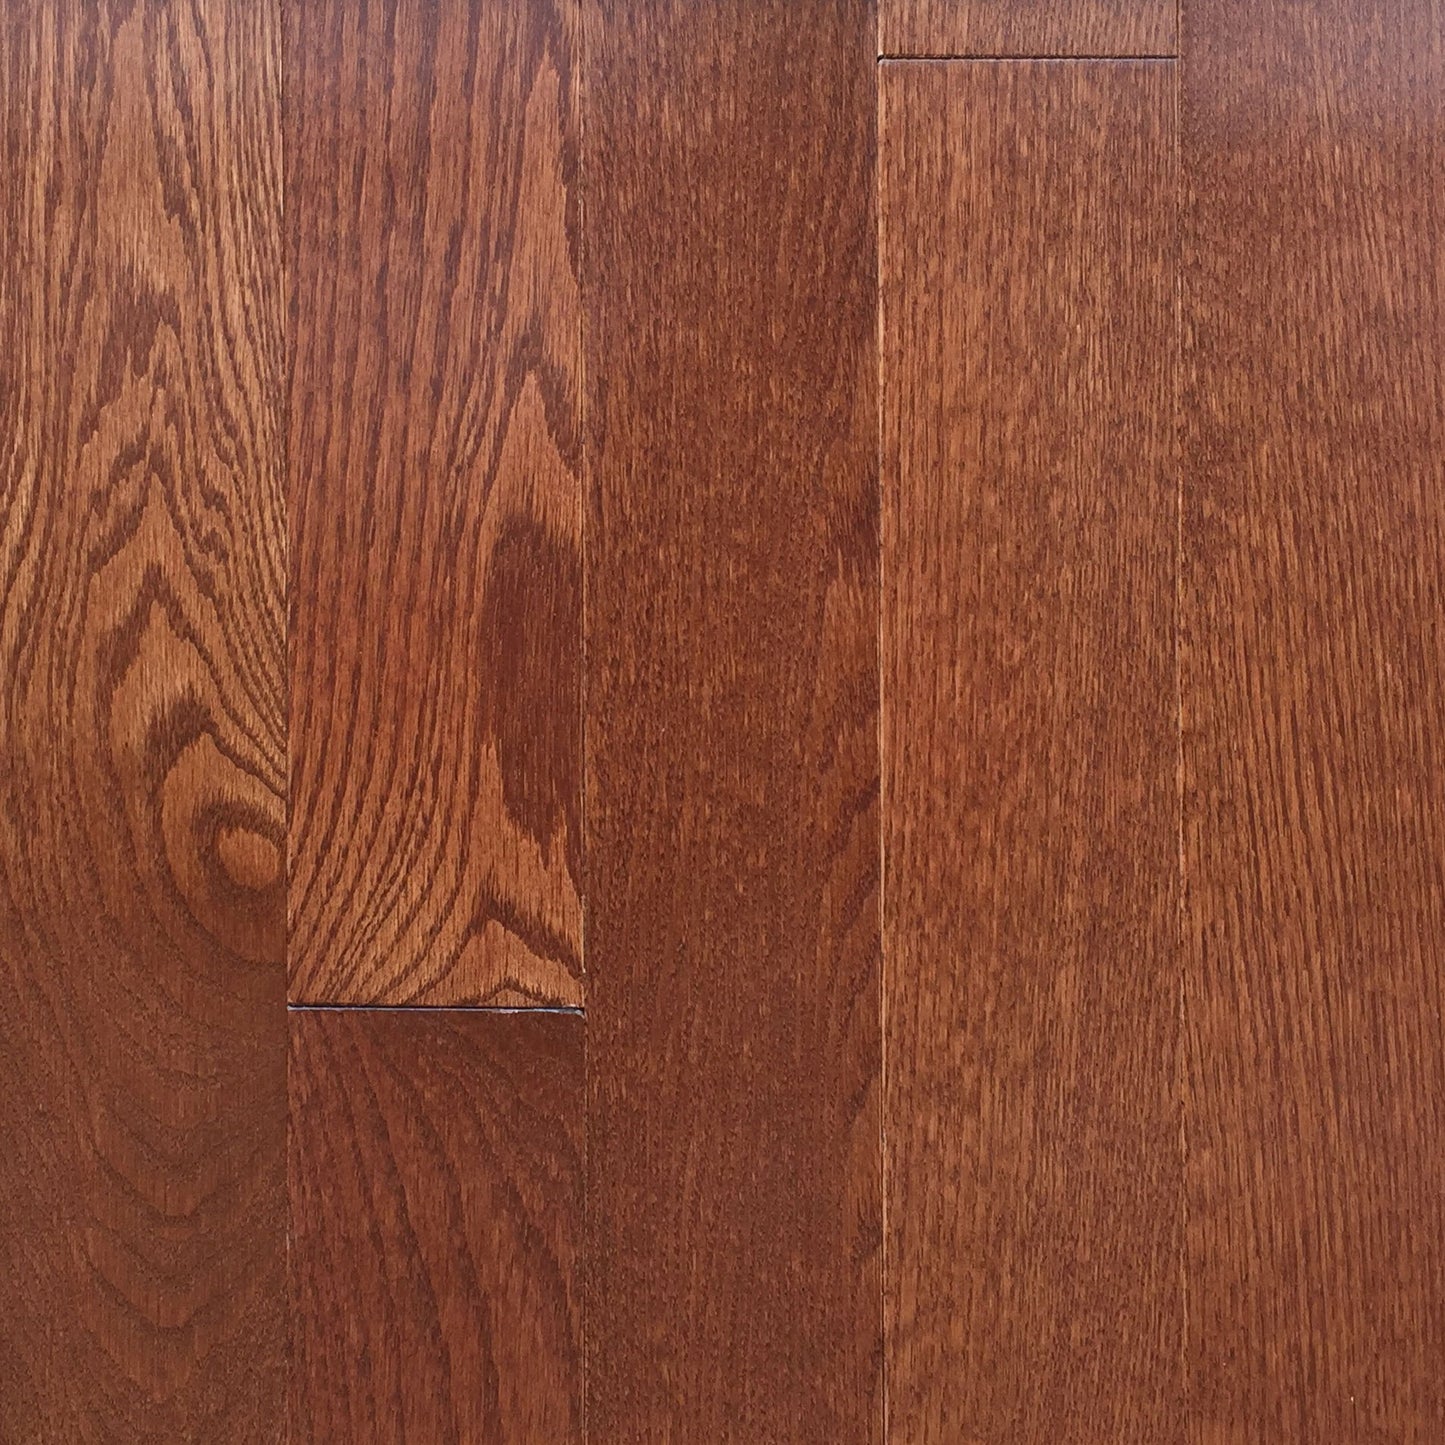 Hardwood Planet Red Oak Collection Wire Brushed Select & Better Crown Saddle Hardwood Flooring